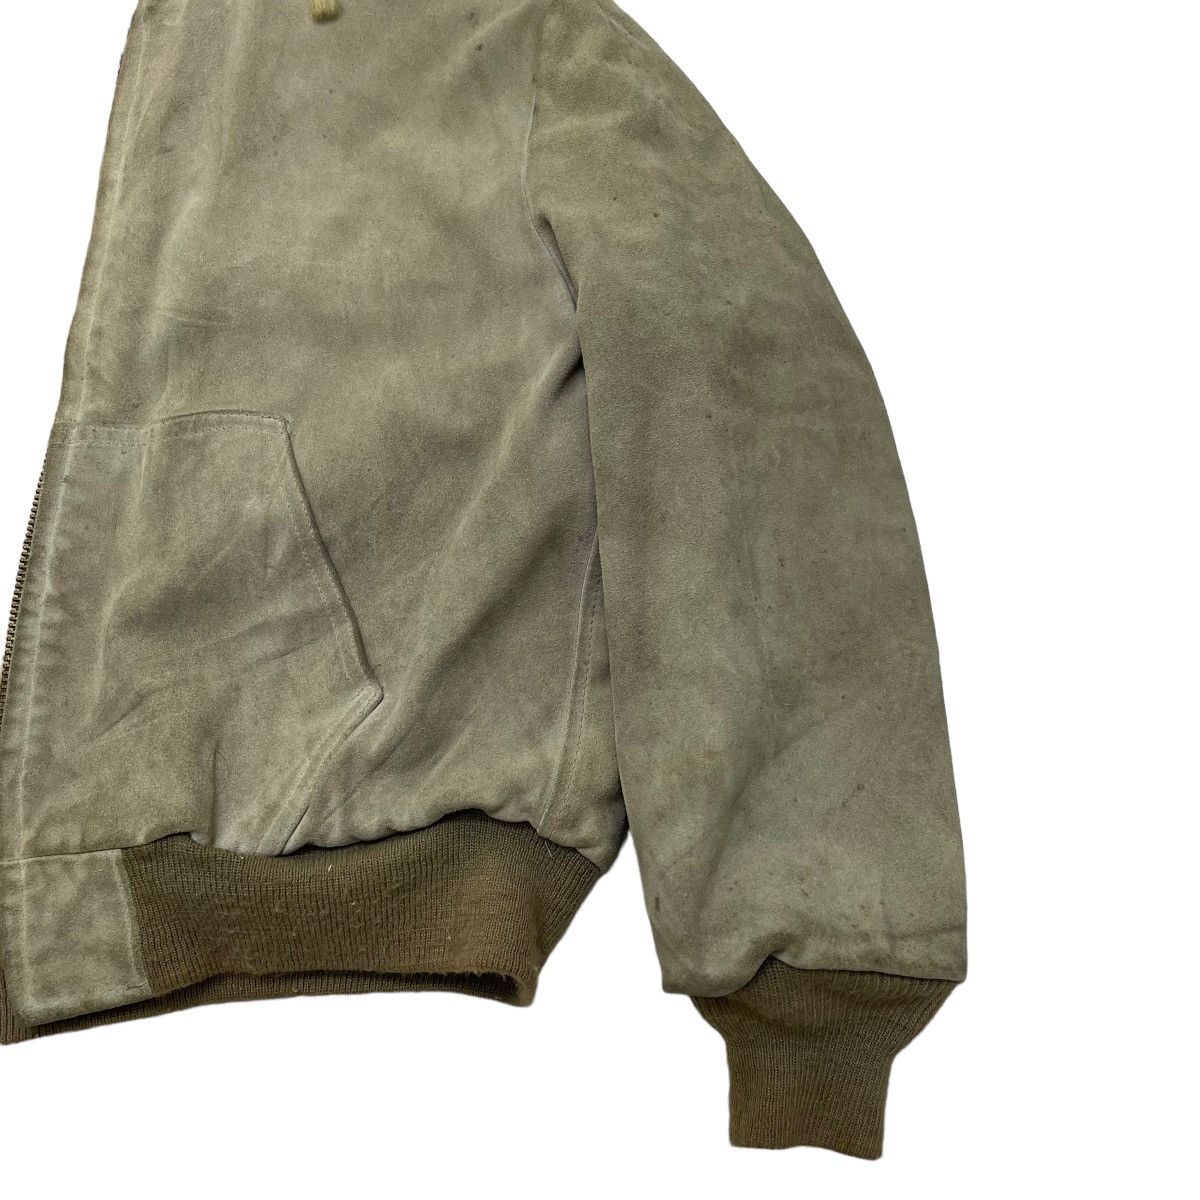 👉Vintage Schott Suede Leather Shearling Hooded Jacket - 6